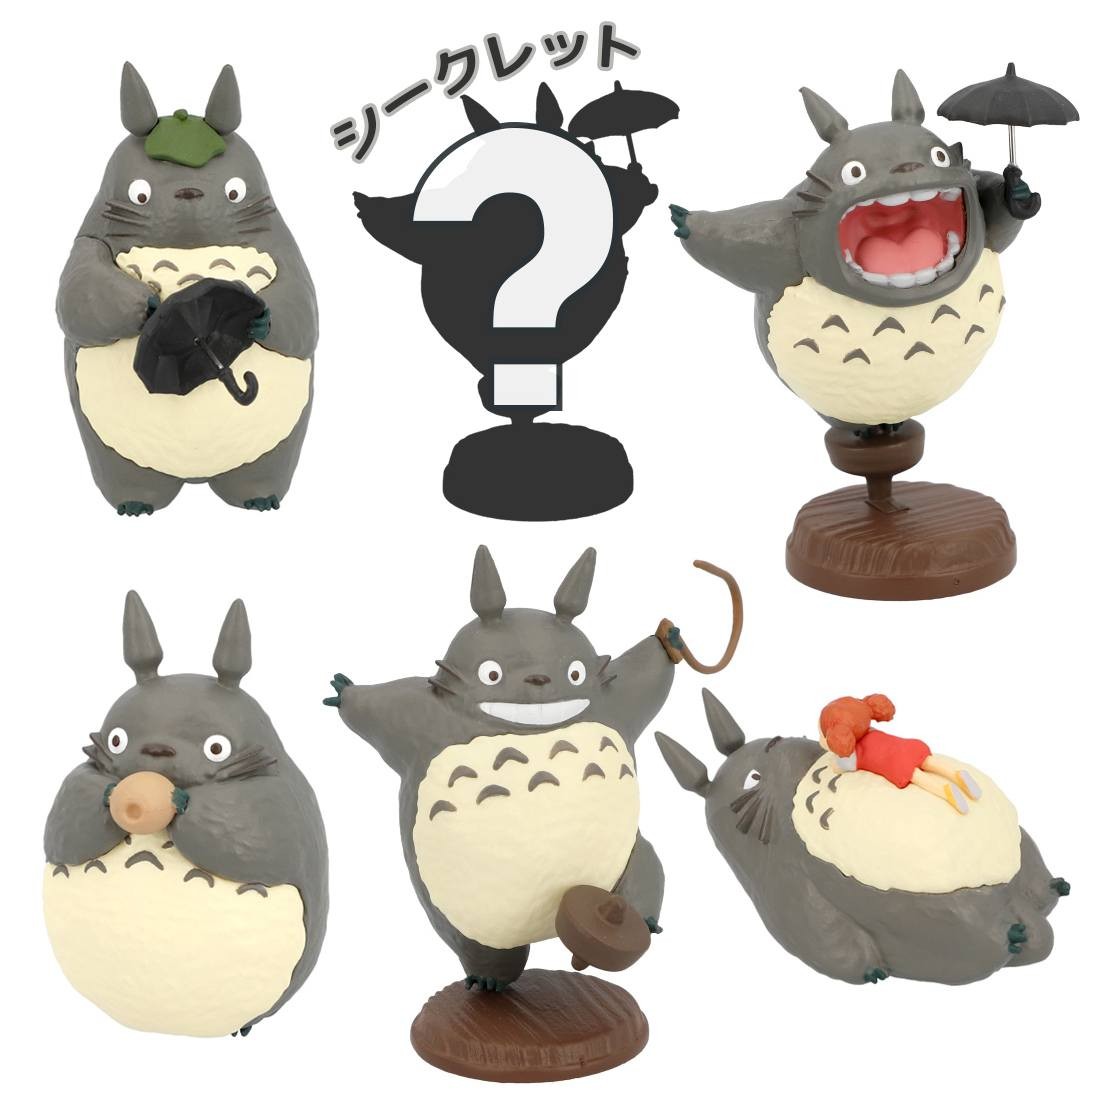 STUDIO GHIBLI - Mon voisin Totoro - Statue Totoro aimanté :  : Figurine Benelic / Studio Ghibli Ghibli